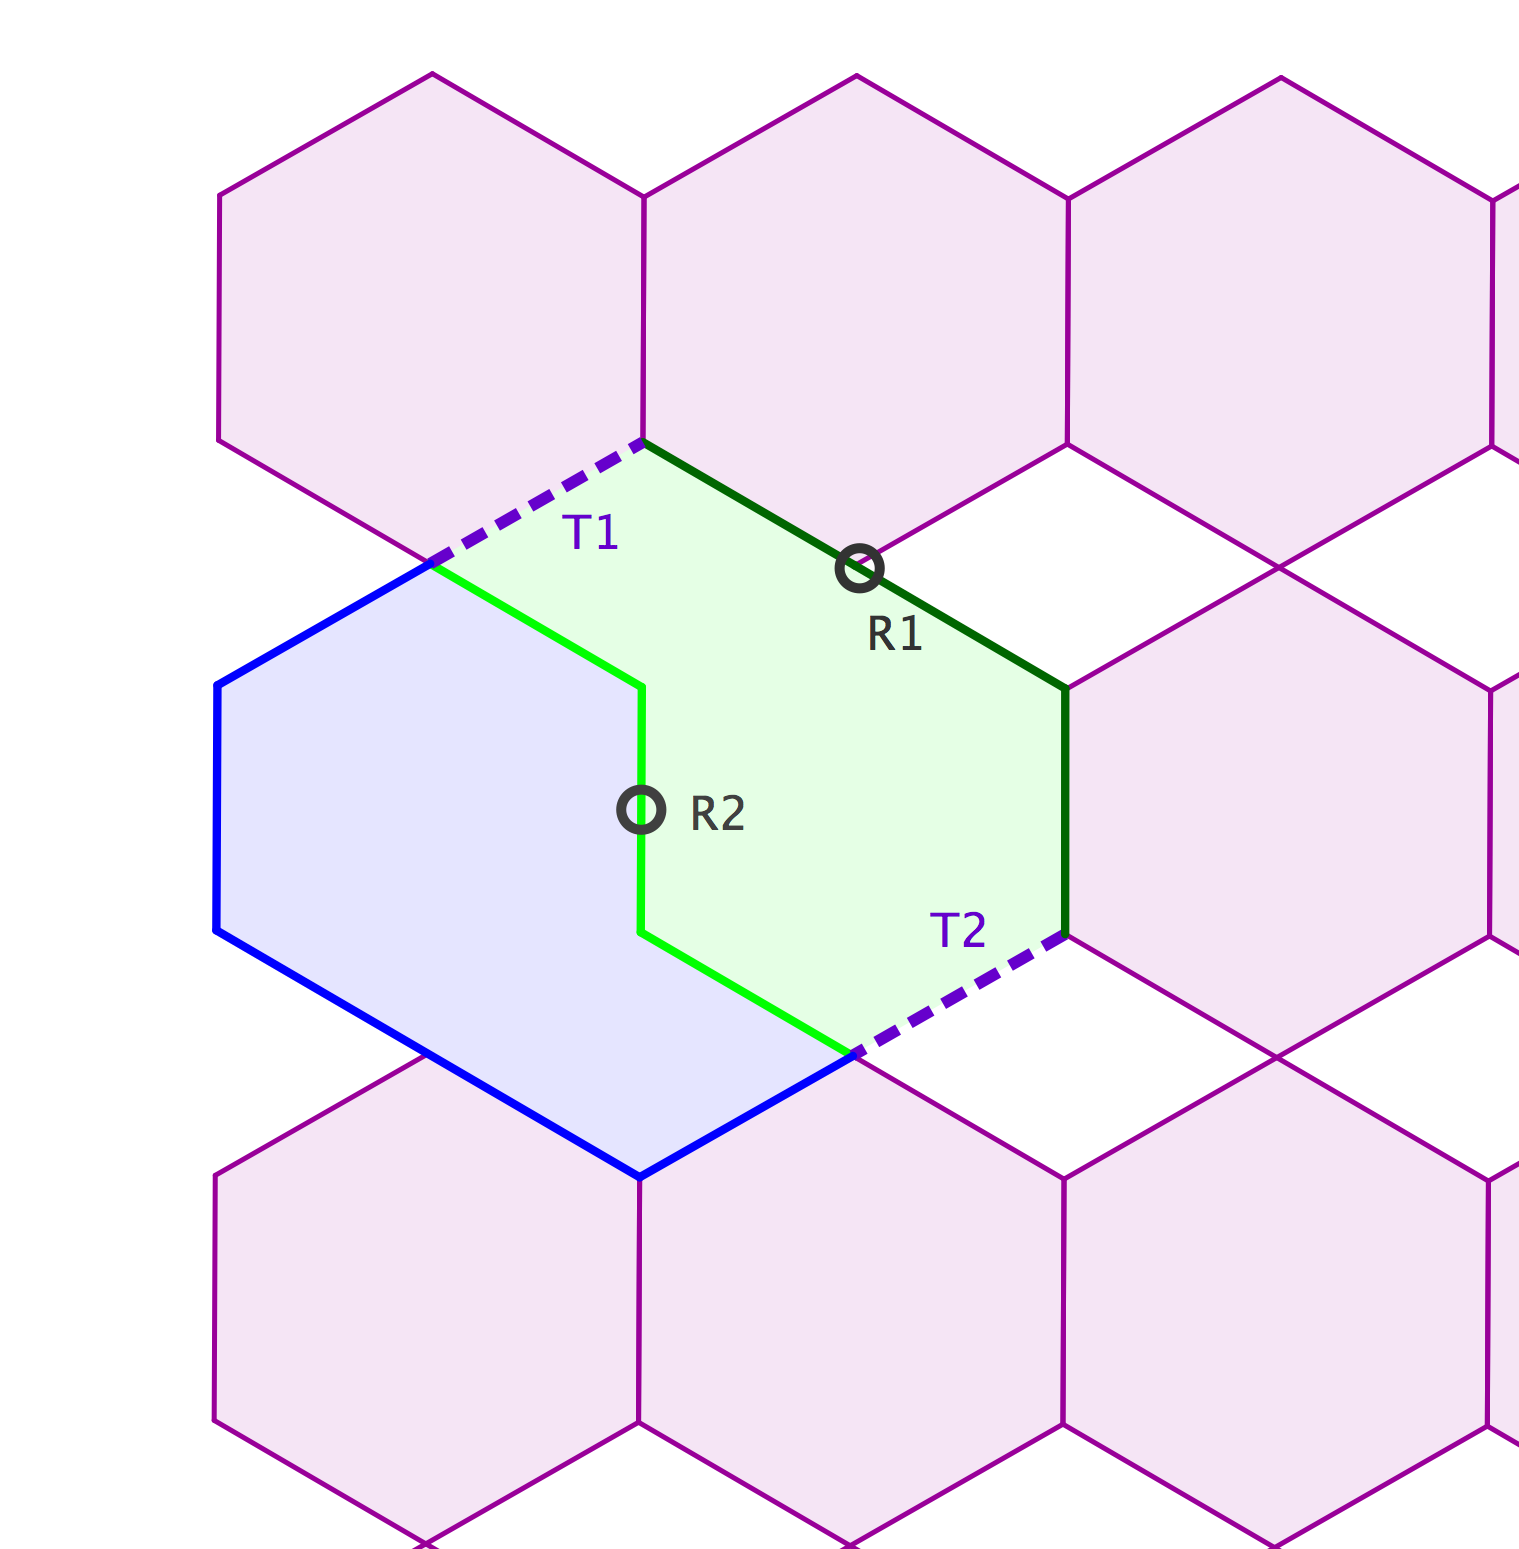 Rotation Tessellation Examples